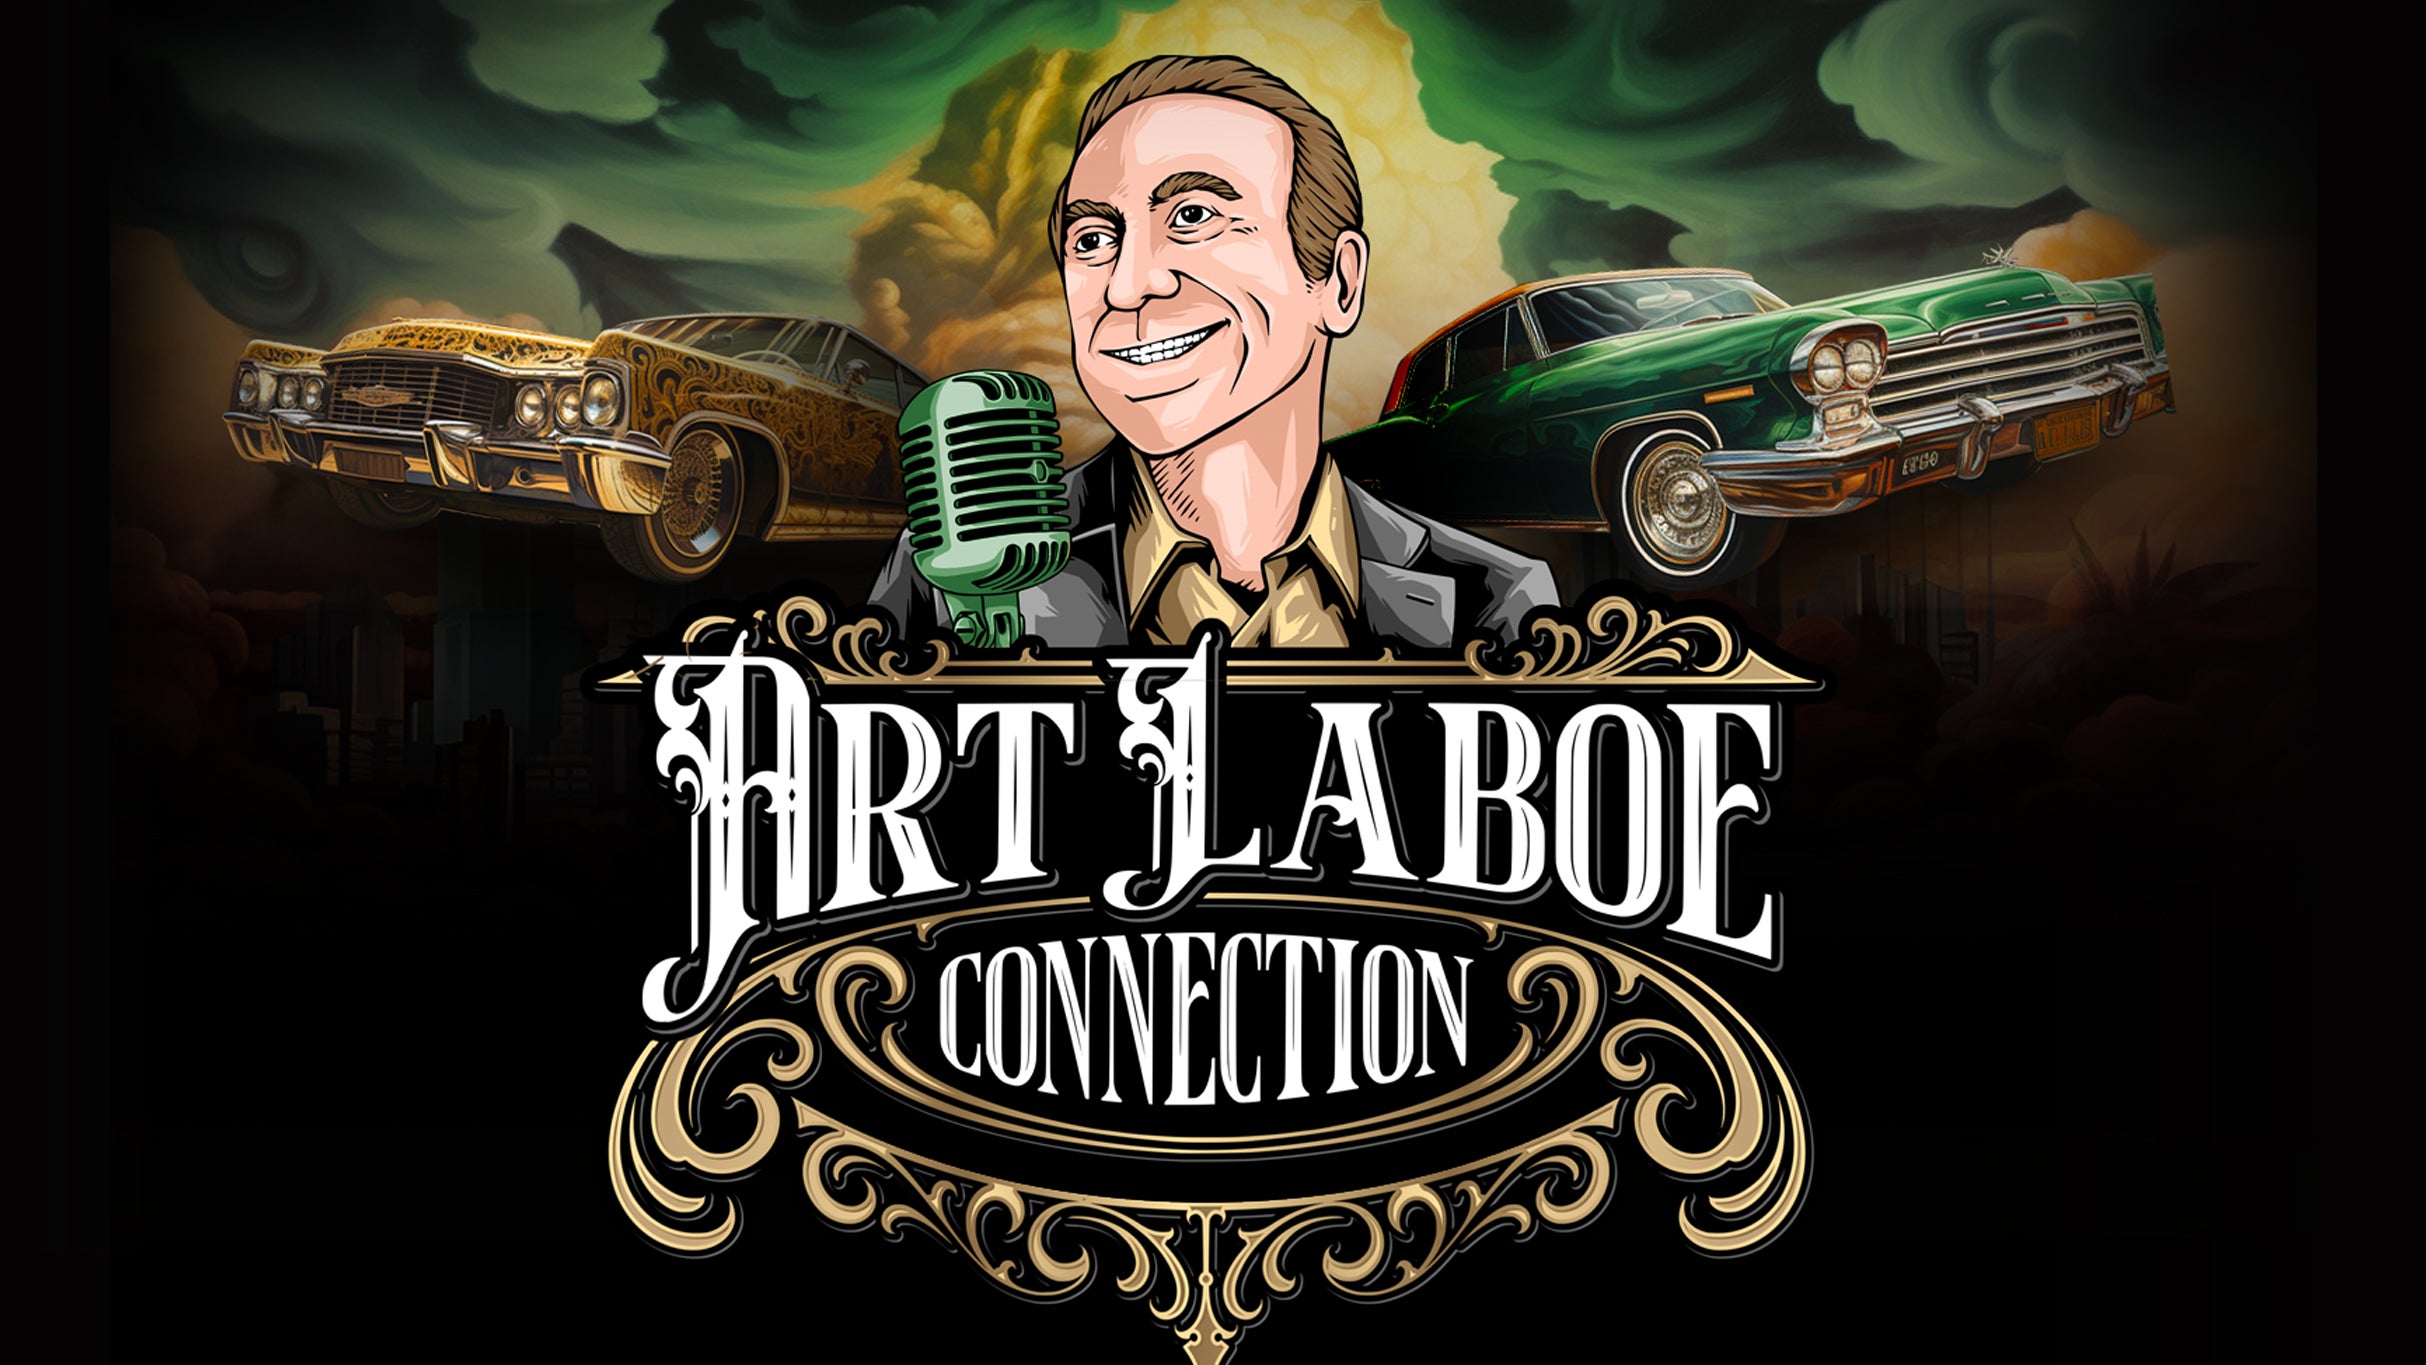 The Art Laboe Connection in San Bernardino promo photo for Official Platinum presale offer code